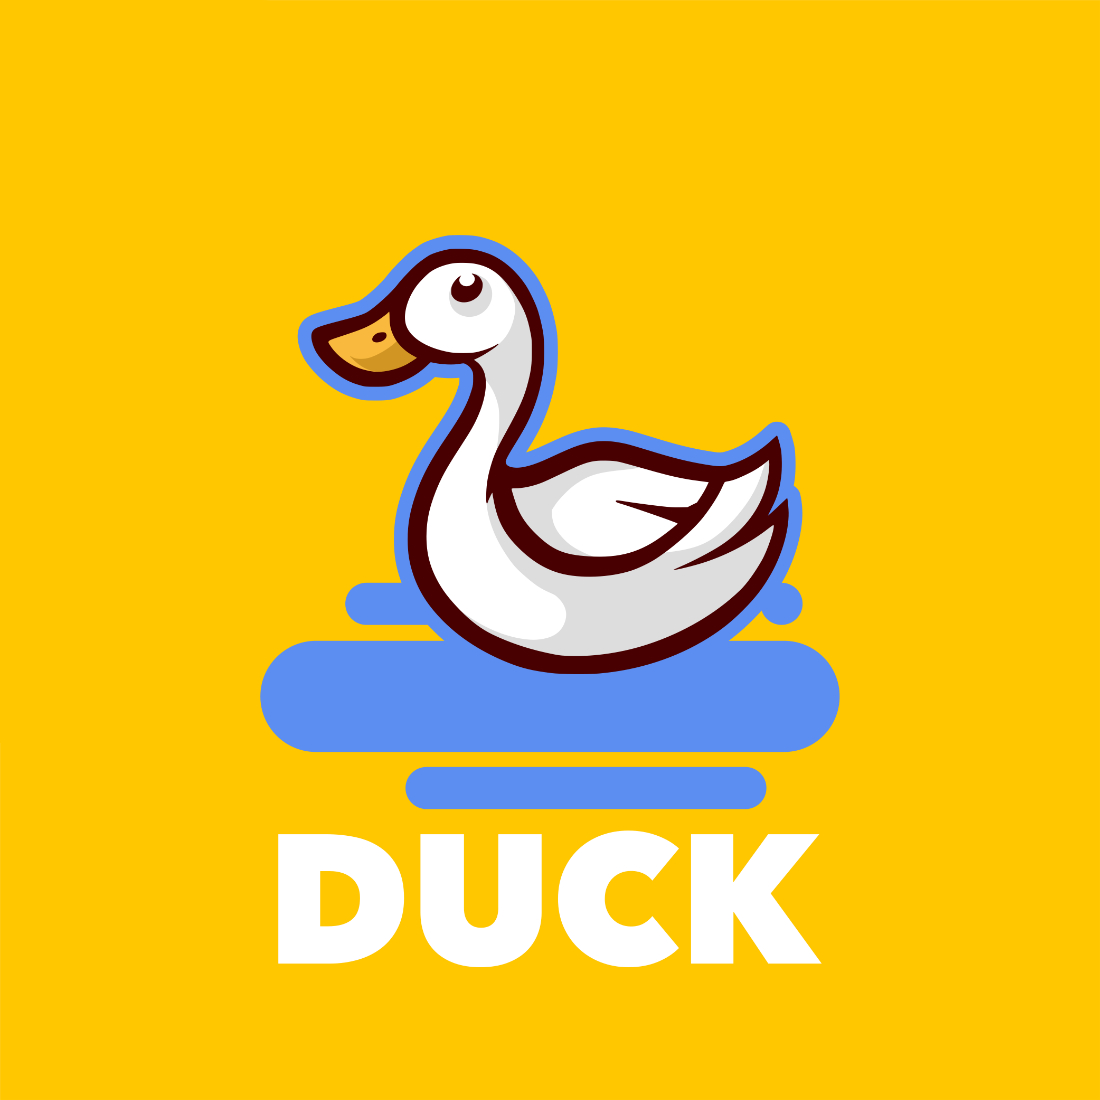 Duck cartoon logo template preview image.